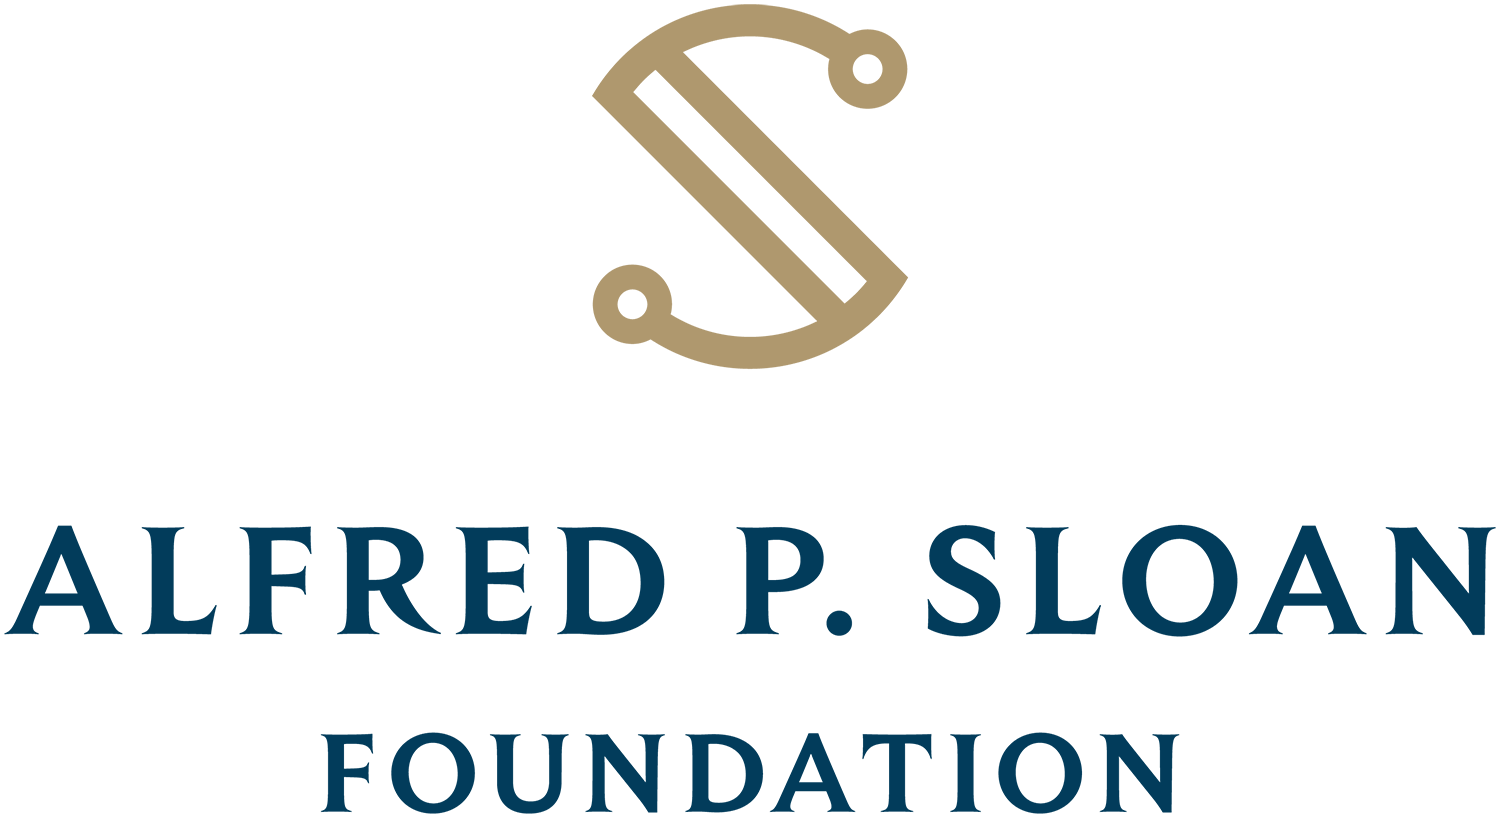 Alfred_P_Sloan_Foundation_Logo